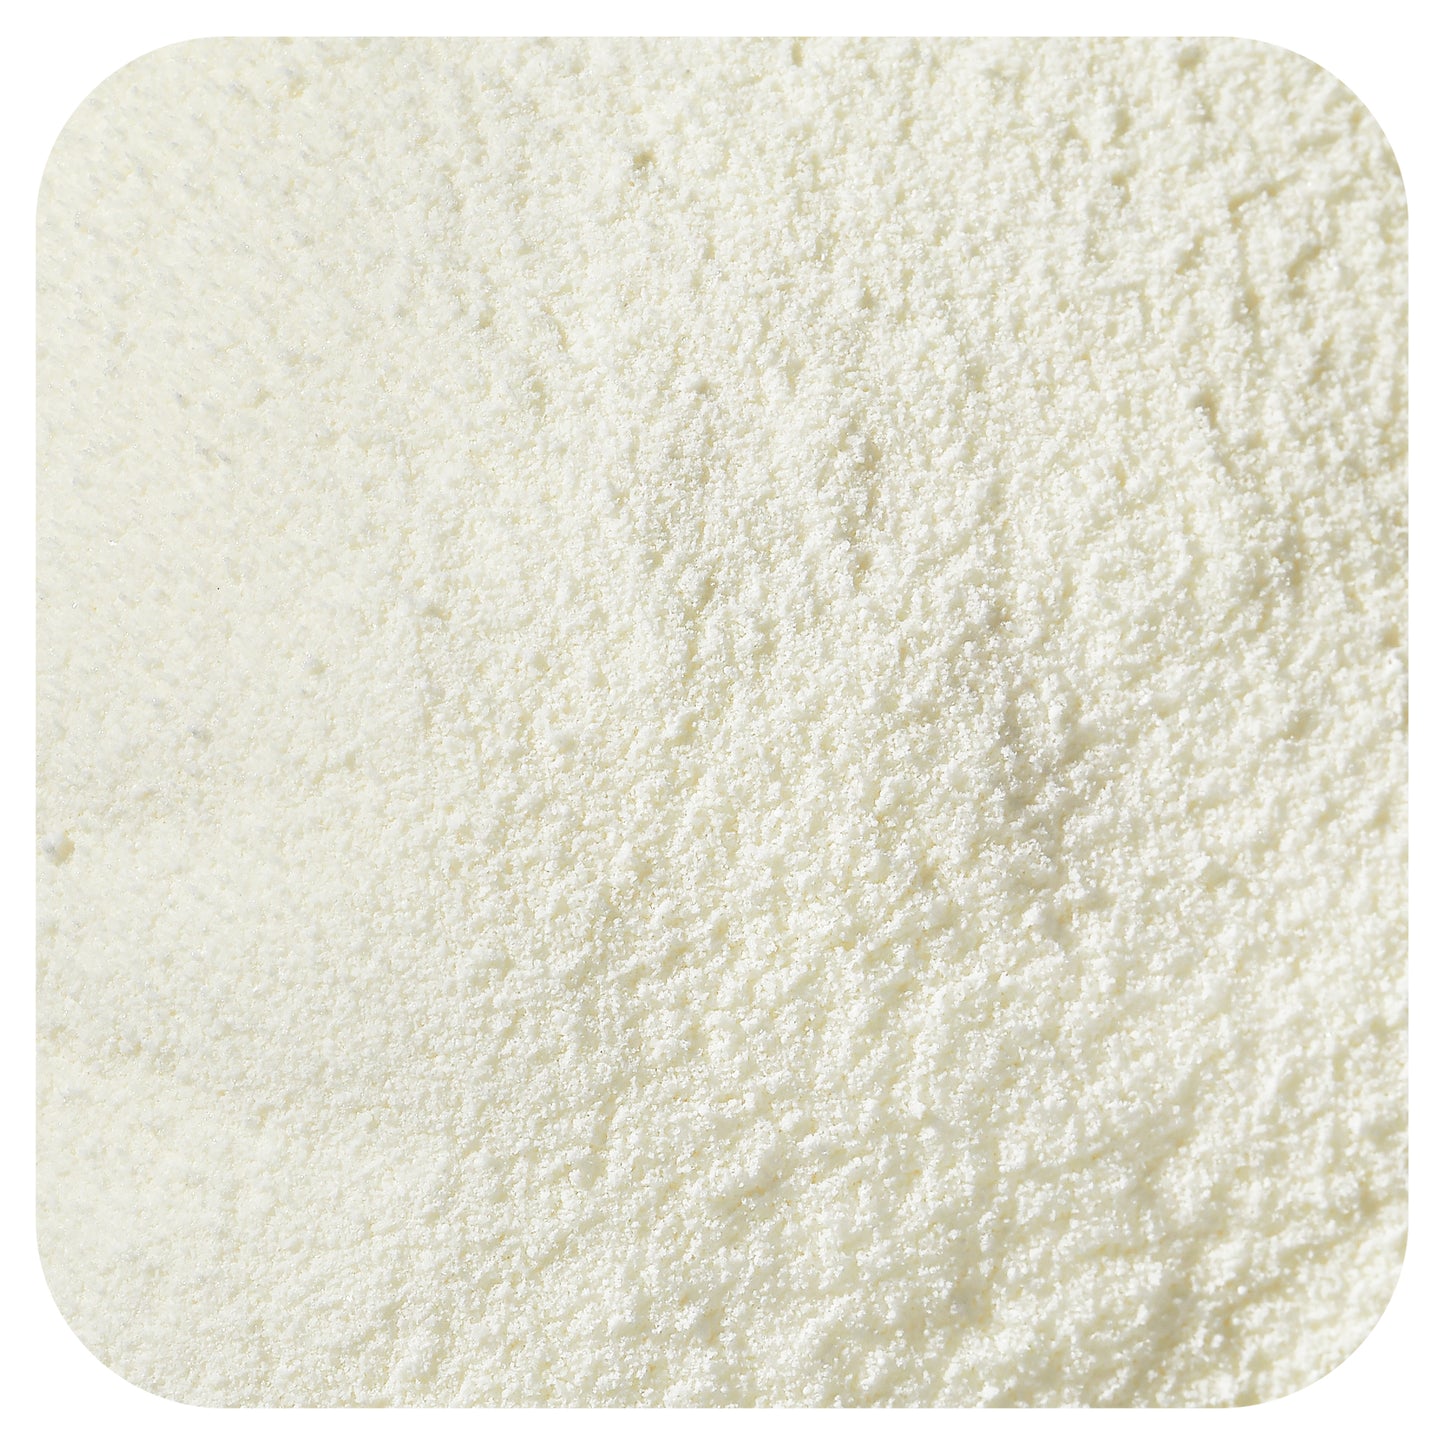 California Gold Nutrition, BCAA Powder, AjiPure, Branched Chain Amino Acids, 16 oz (454 g)